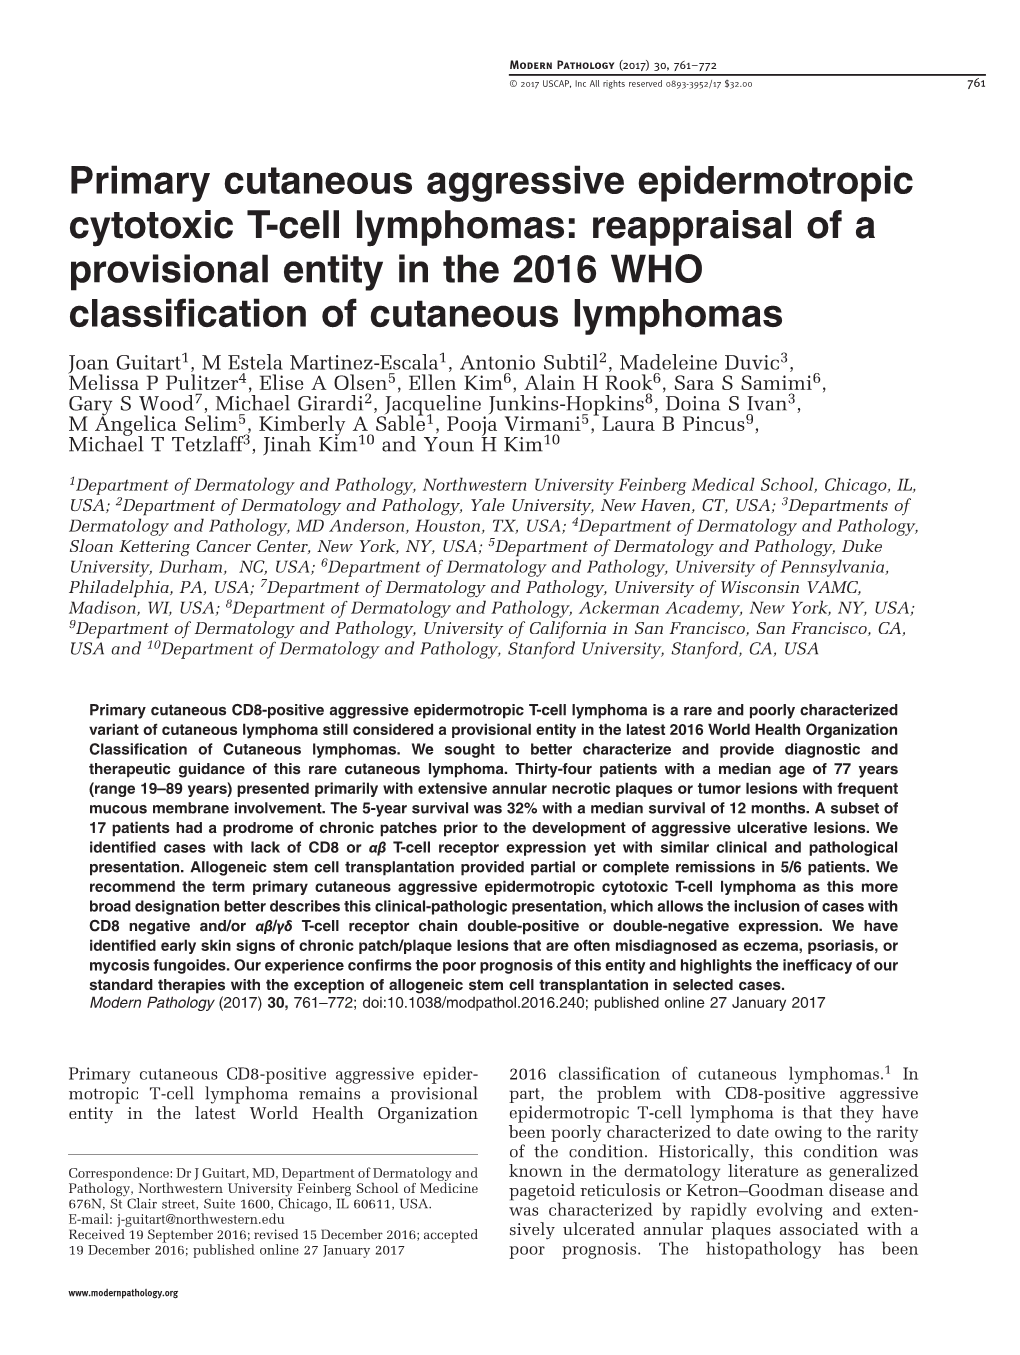 Primary Cutaneous Aggressive Epidermotropic Cytotoxic T-Cell